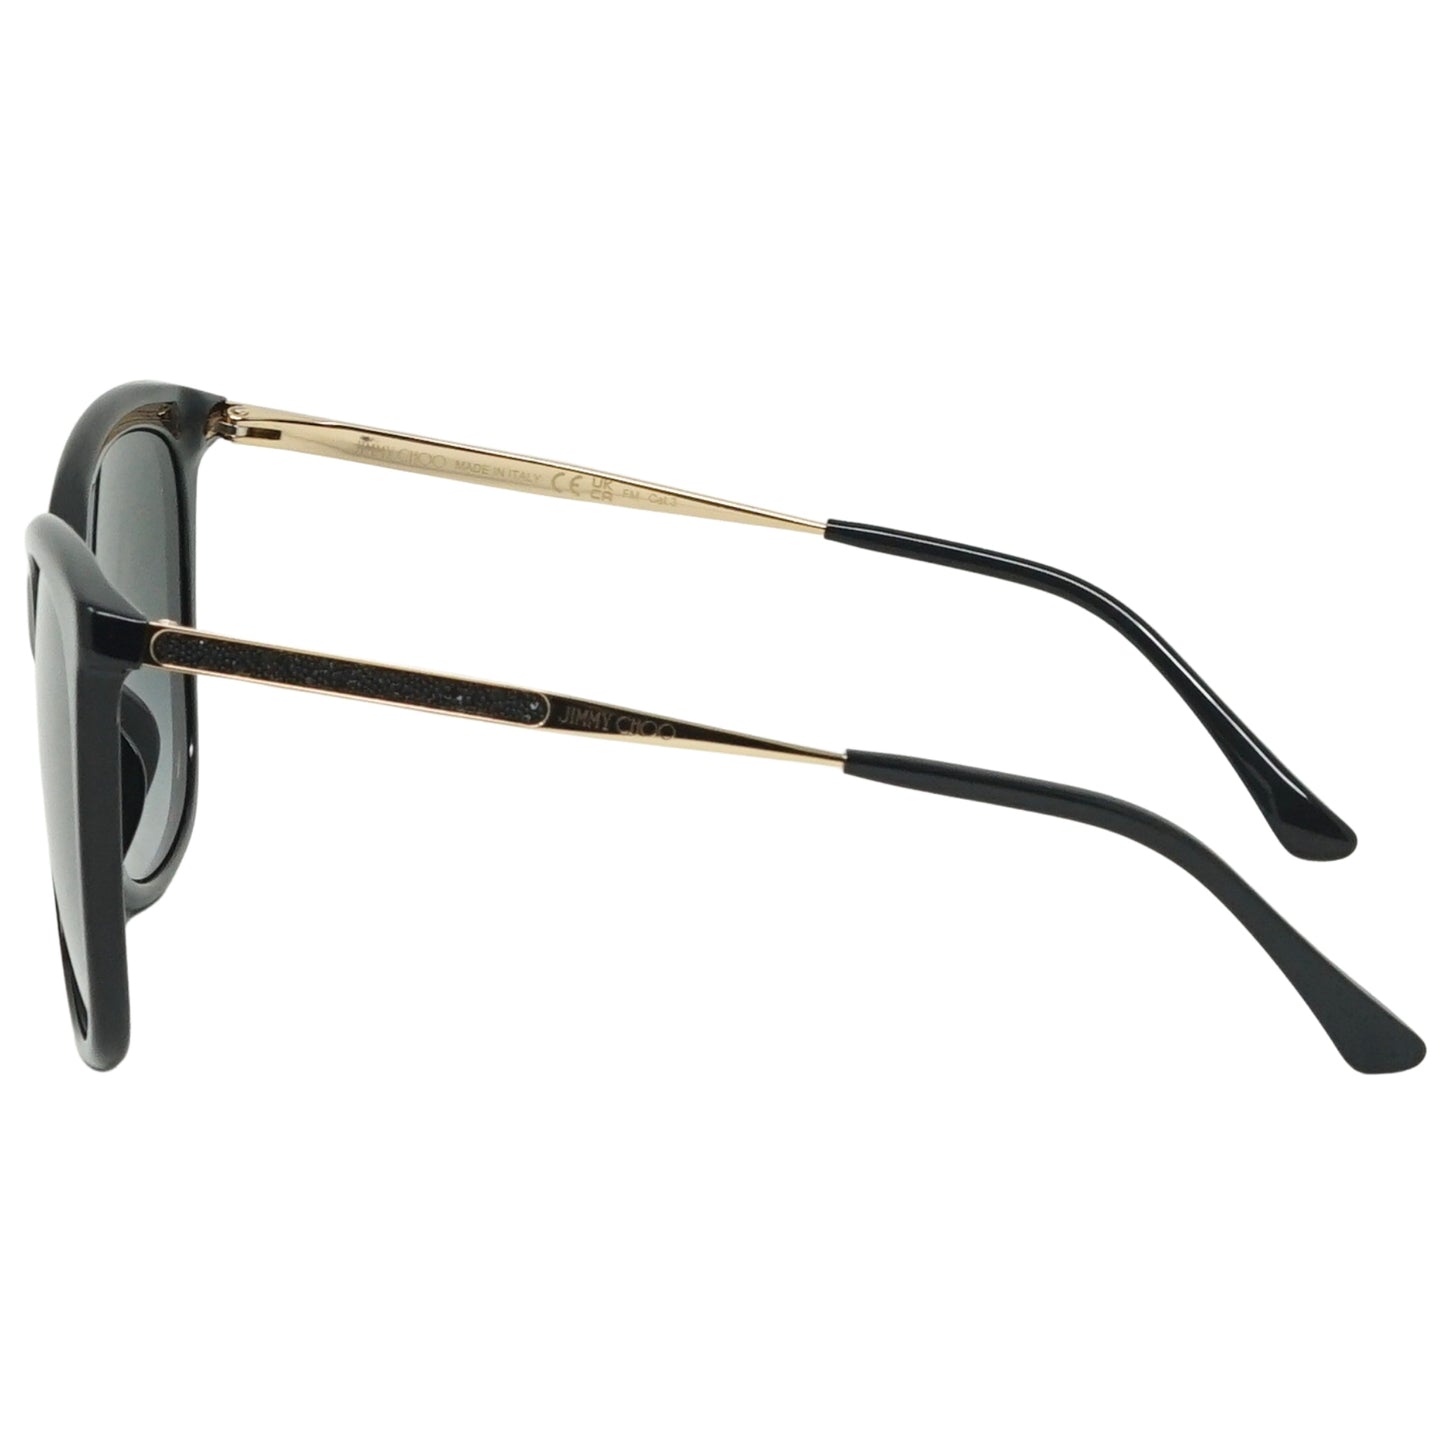 Jimmy Choo Nerea/G/S 807 Black Sunglasses